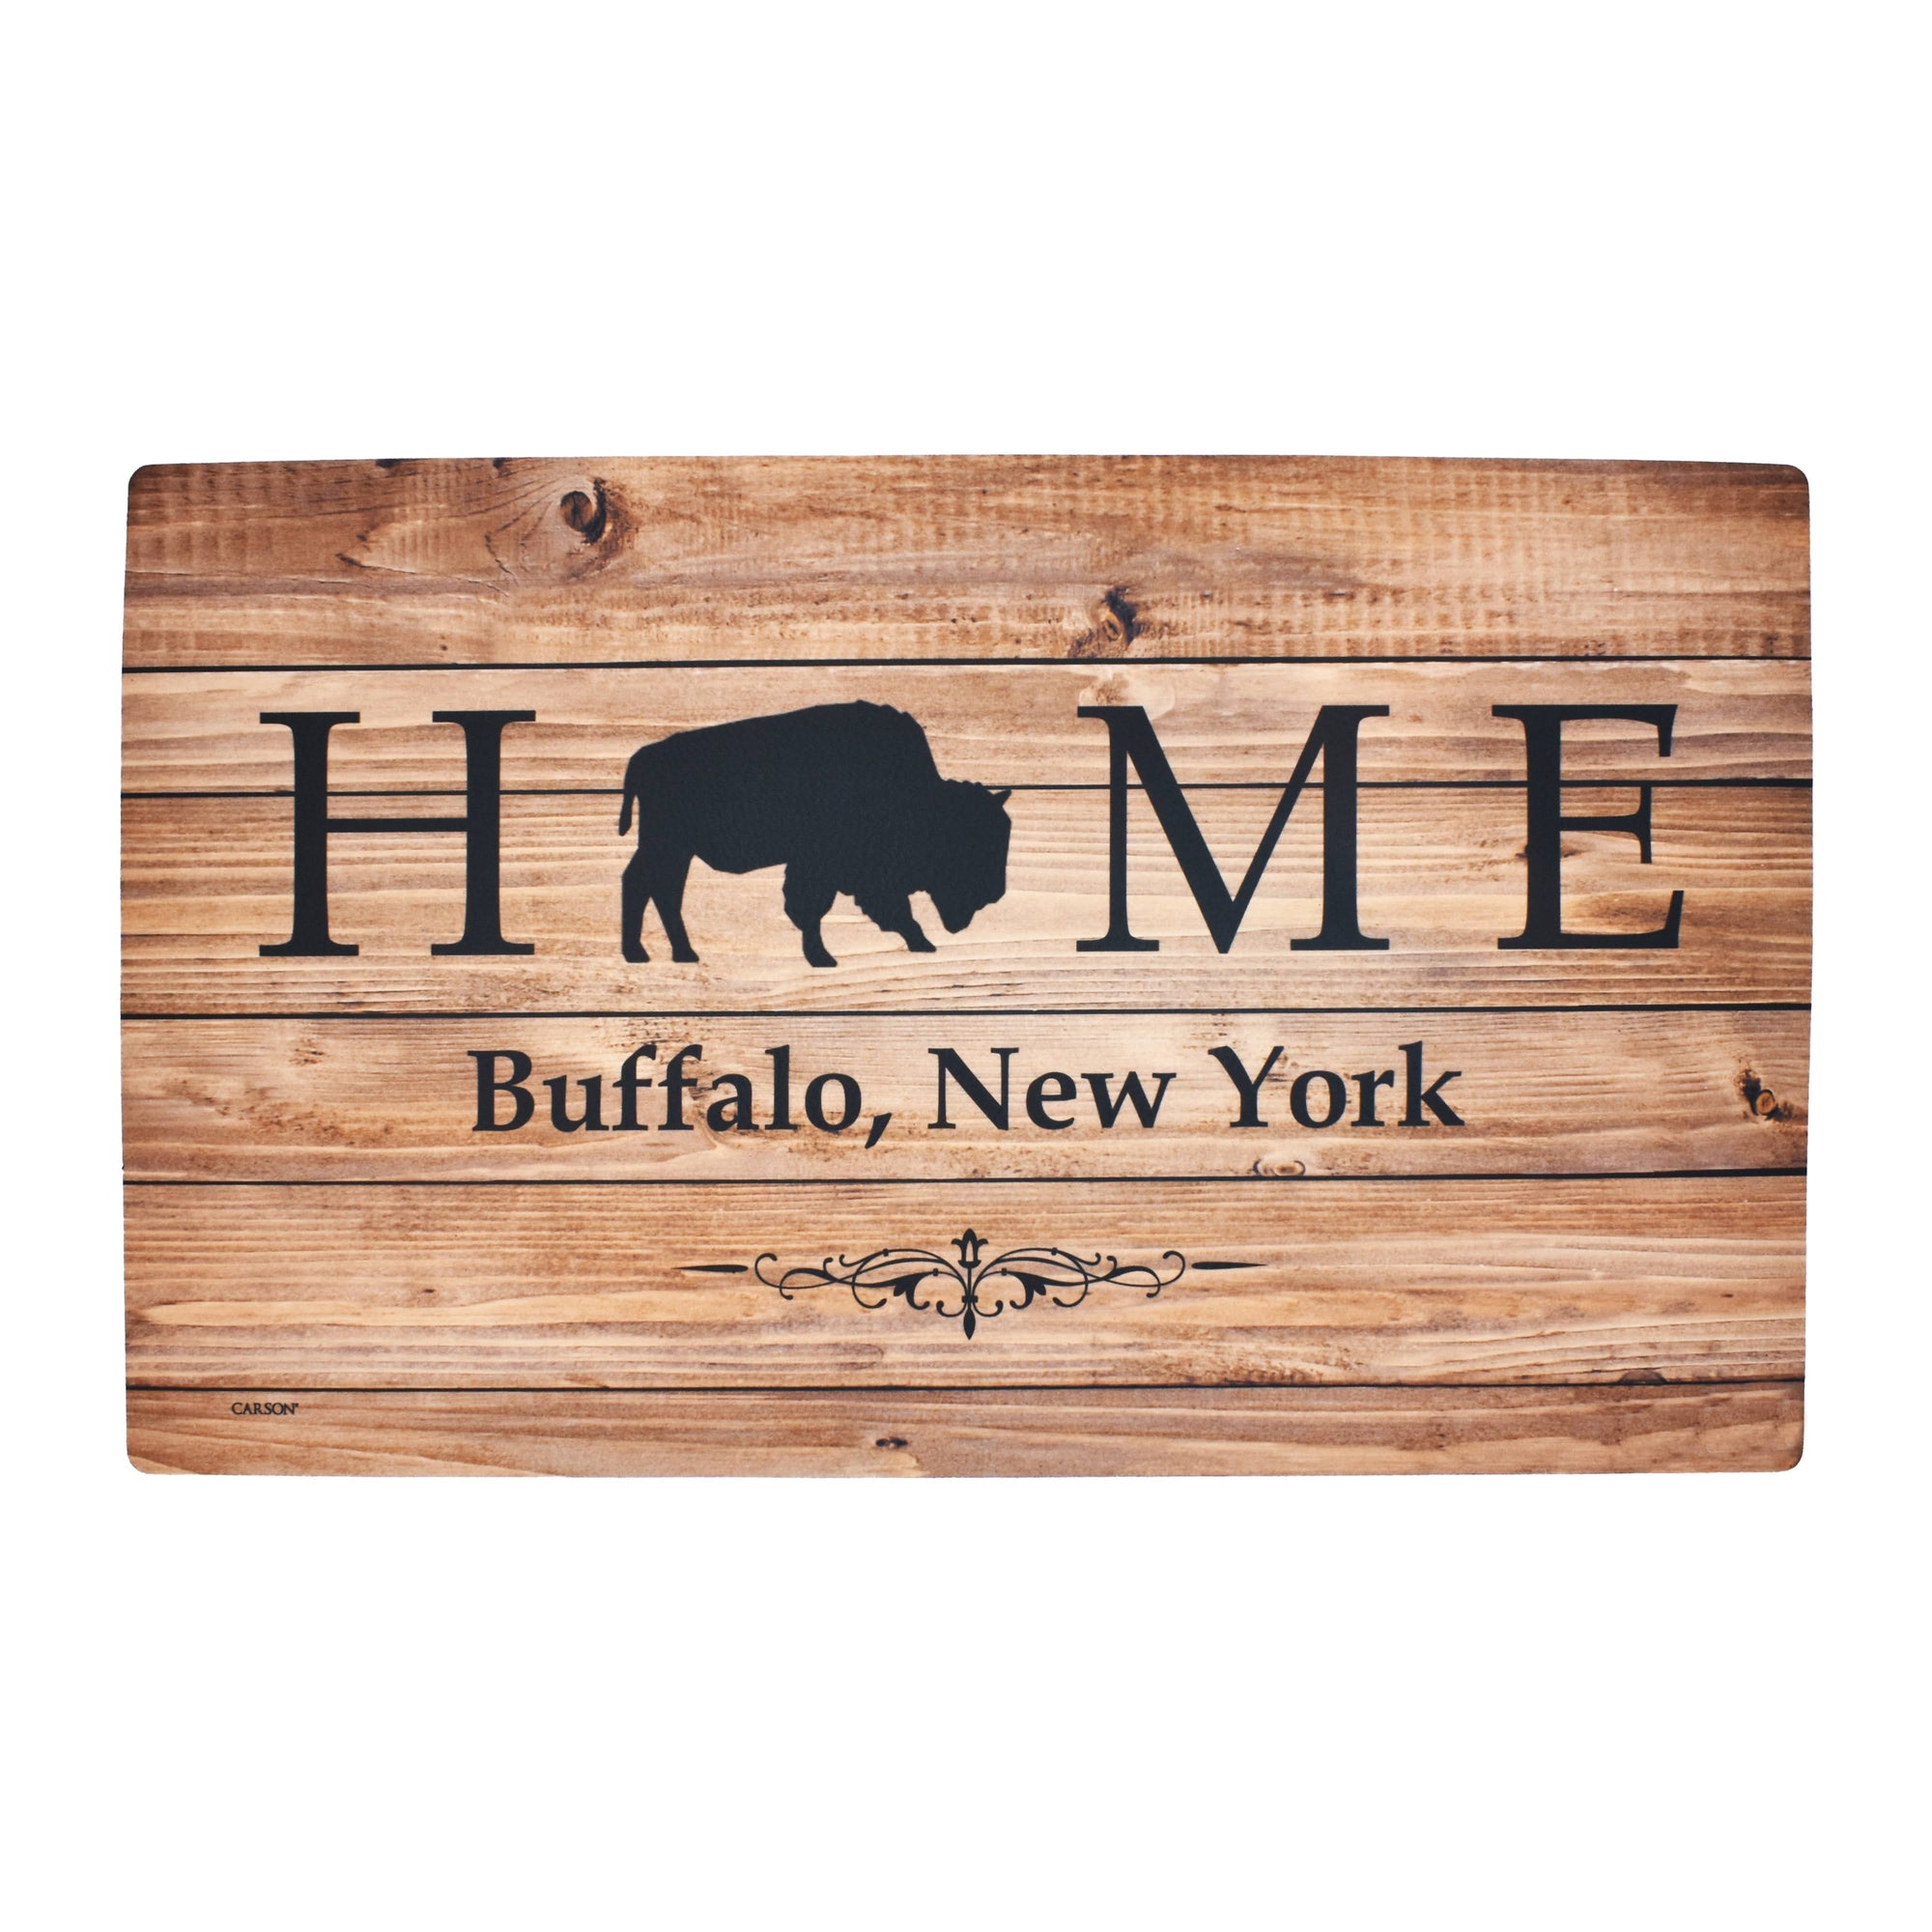 bflo store Buffalo, New York Wooden Plank Background Doormat